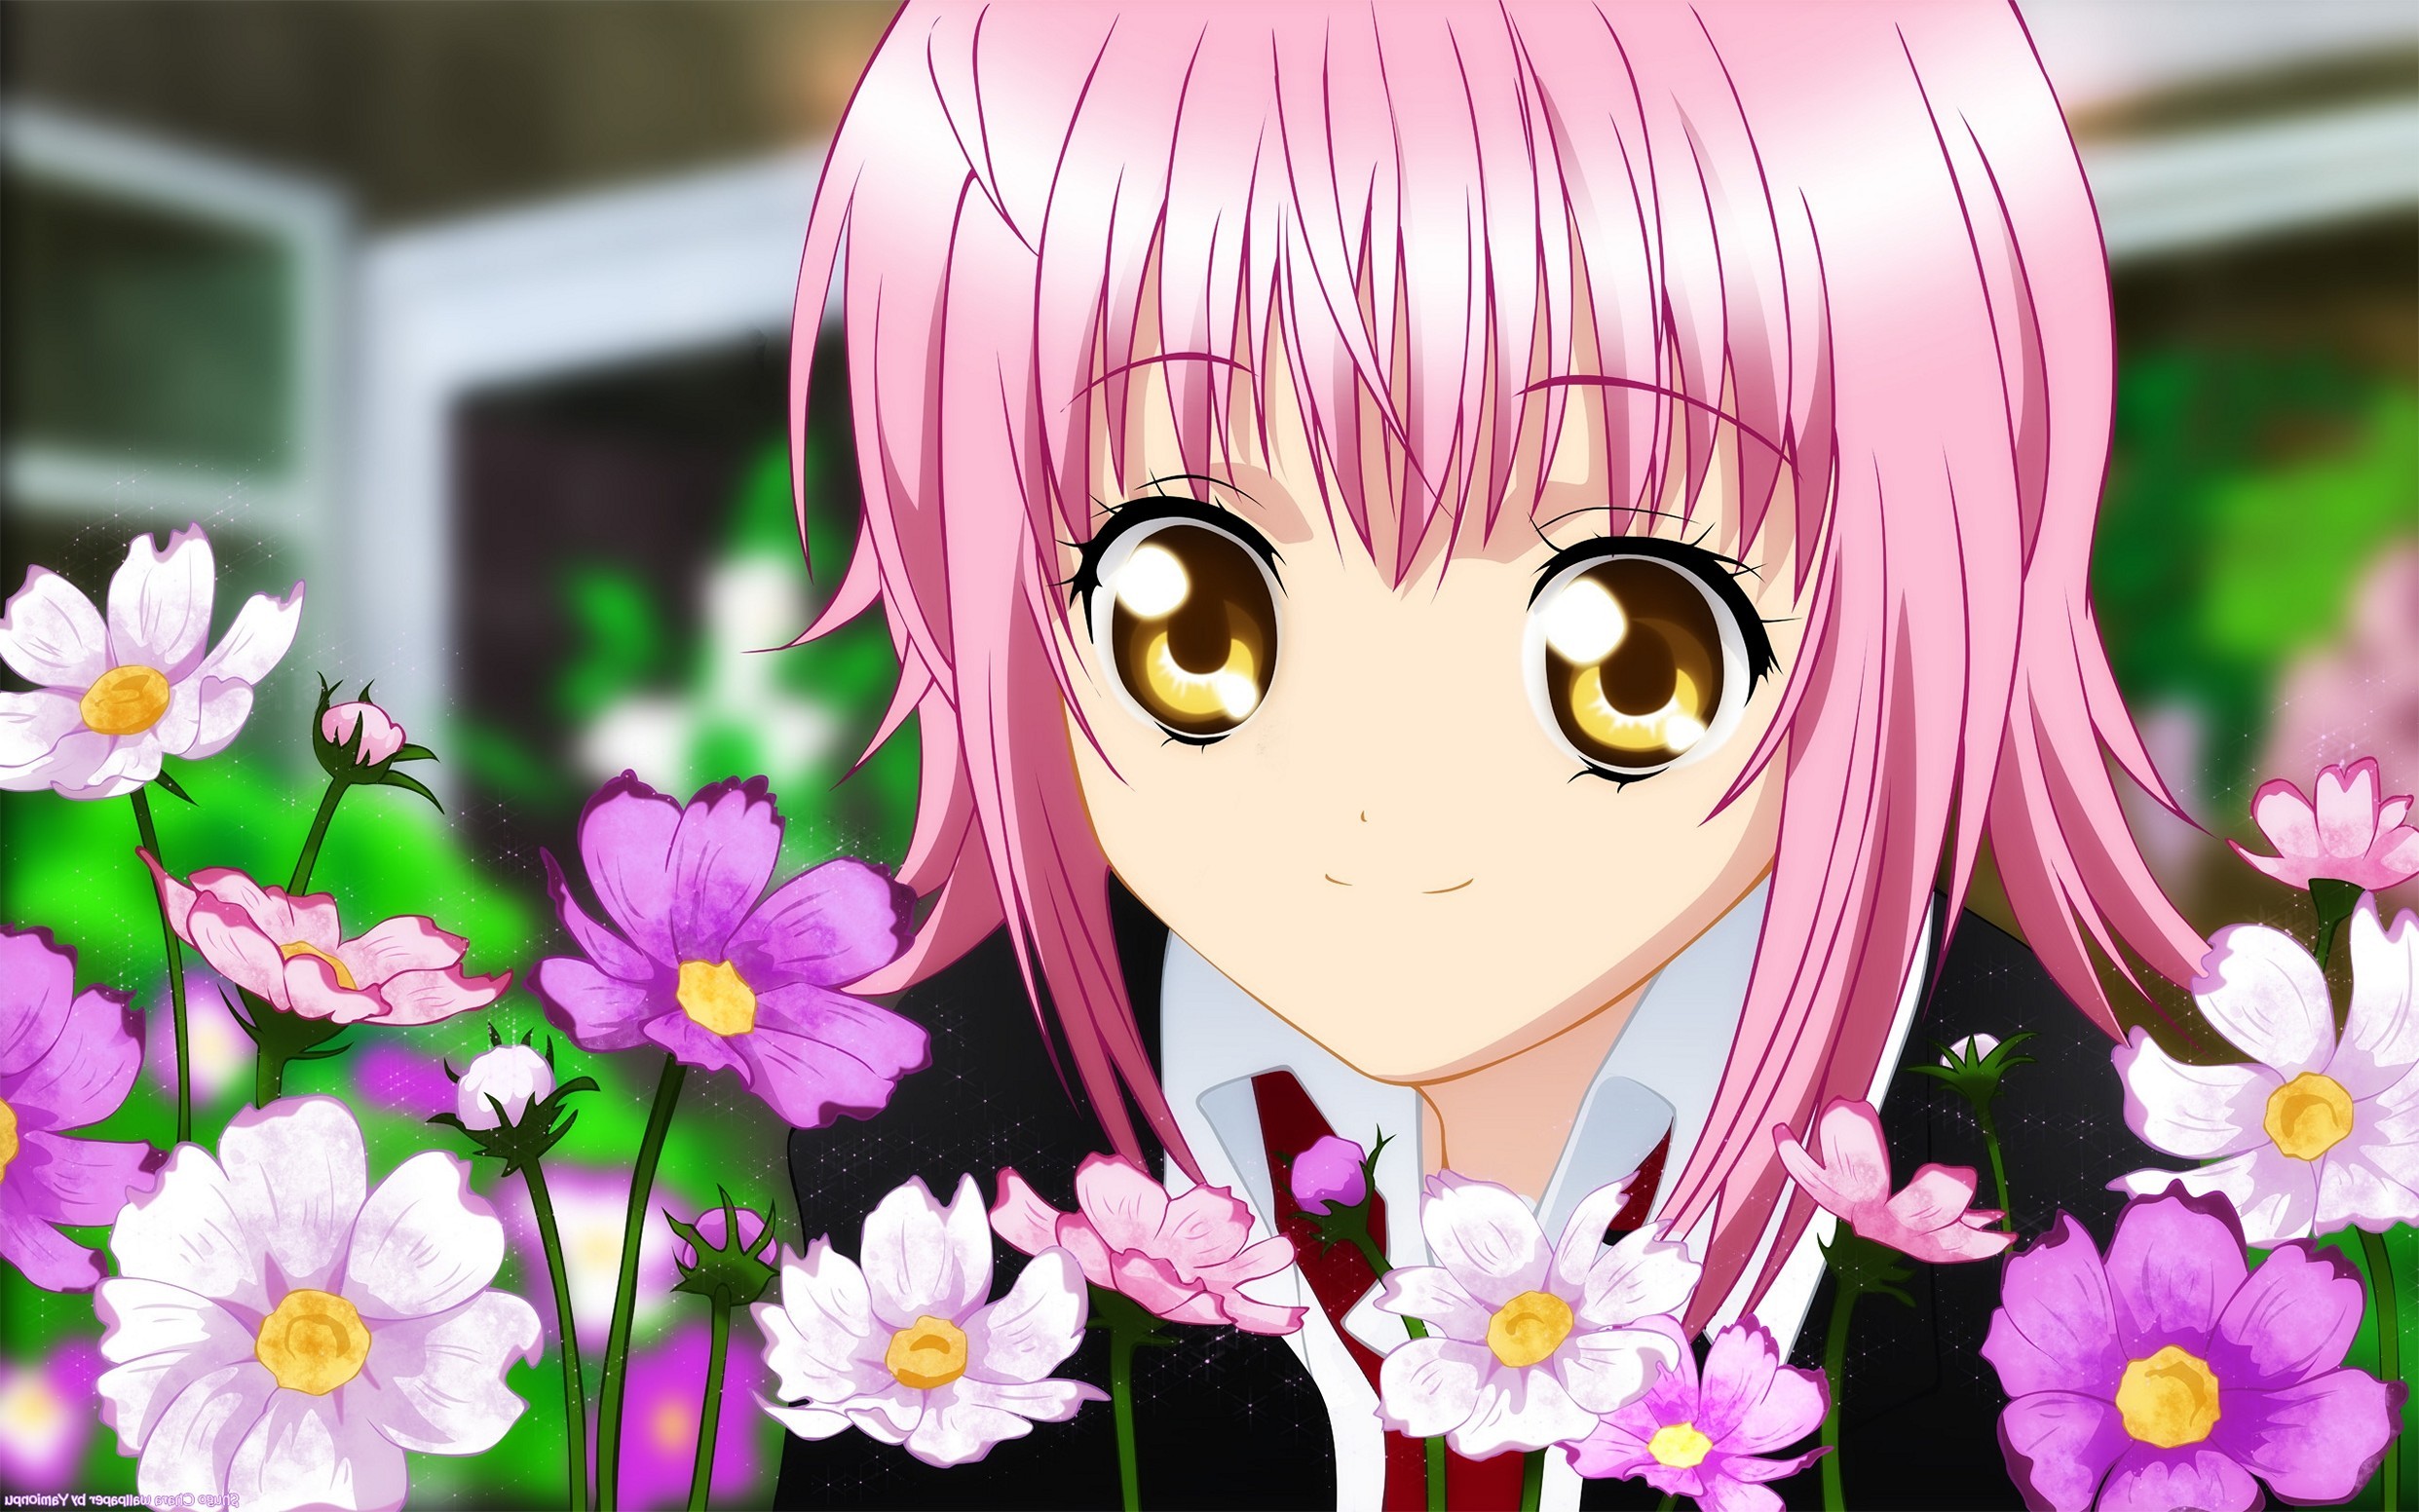 Girl Cute Flowers Smiling Pink Favorite Anime Wallpaper Phone